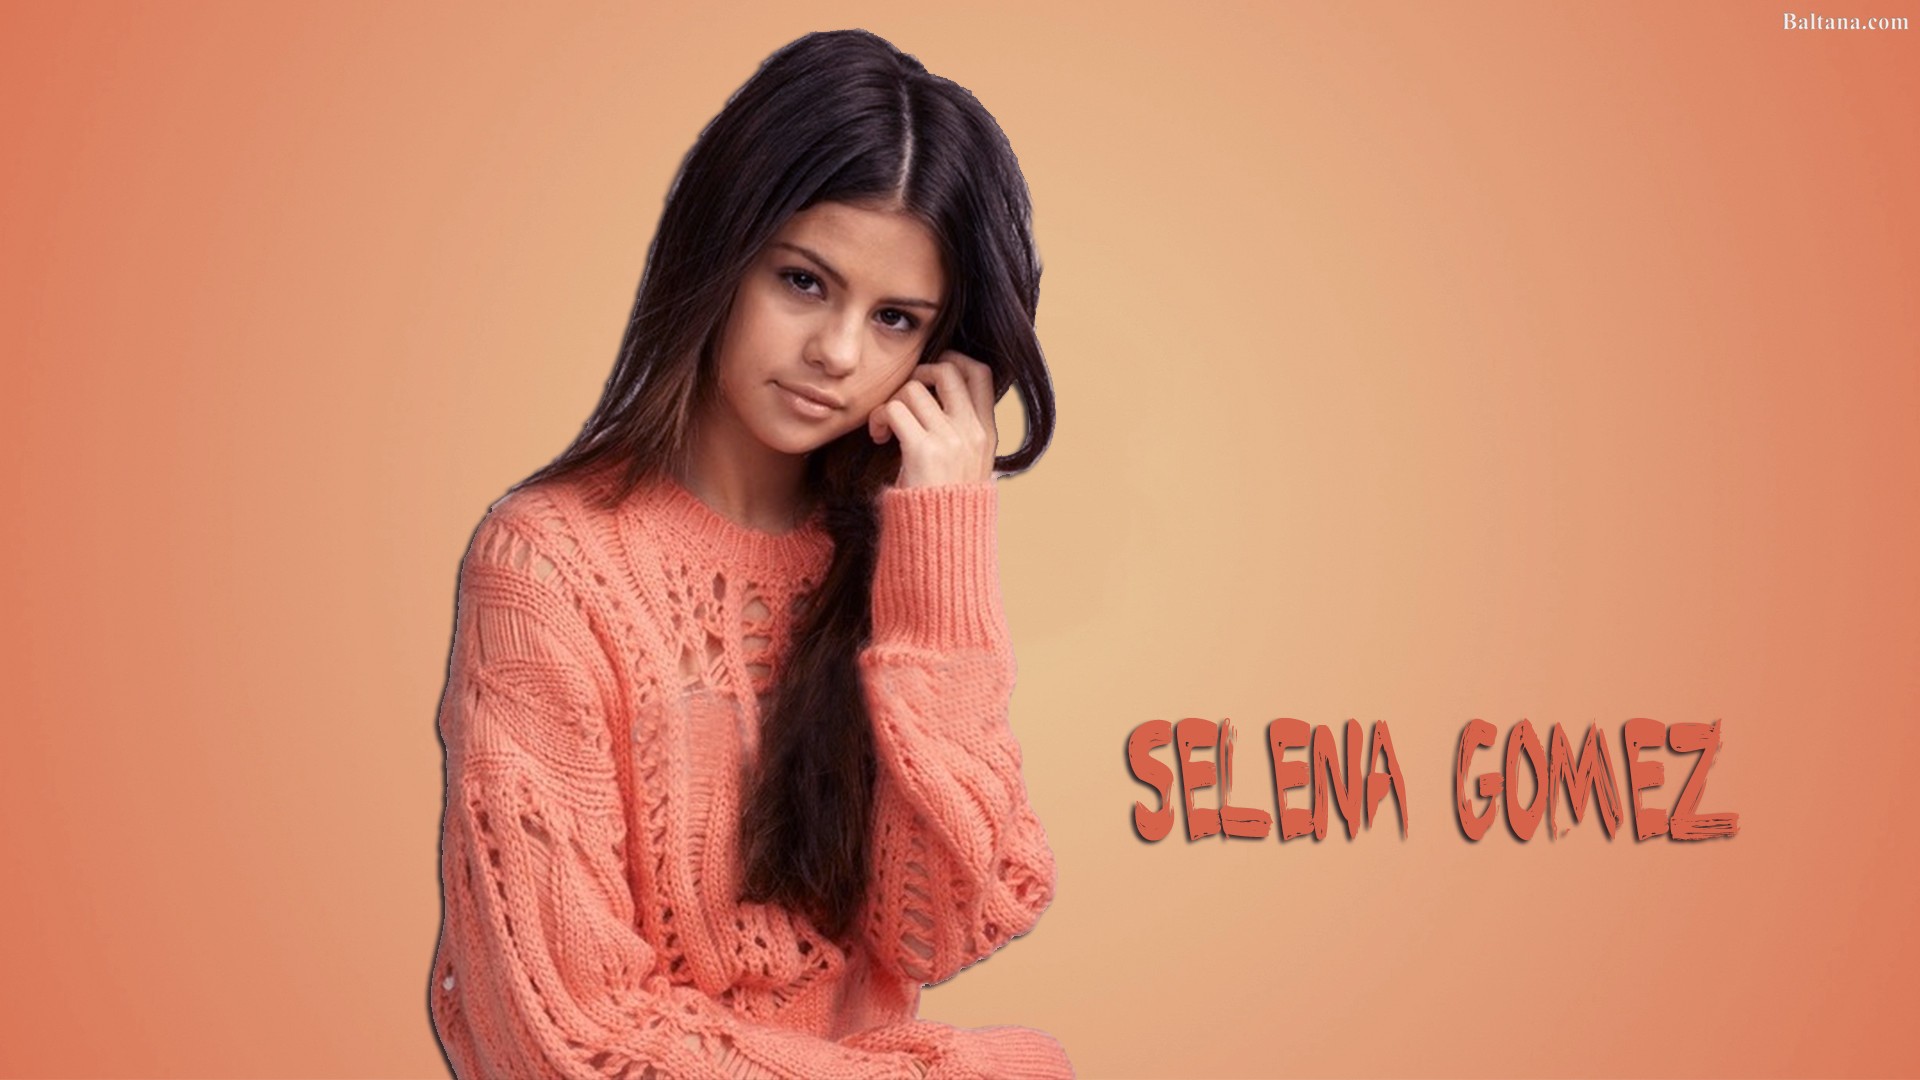 Selena Gomez Wallpaper HD Background Image Pics Photos